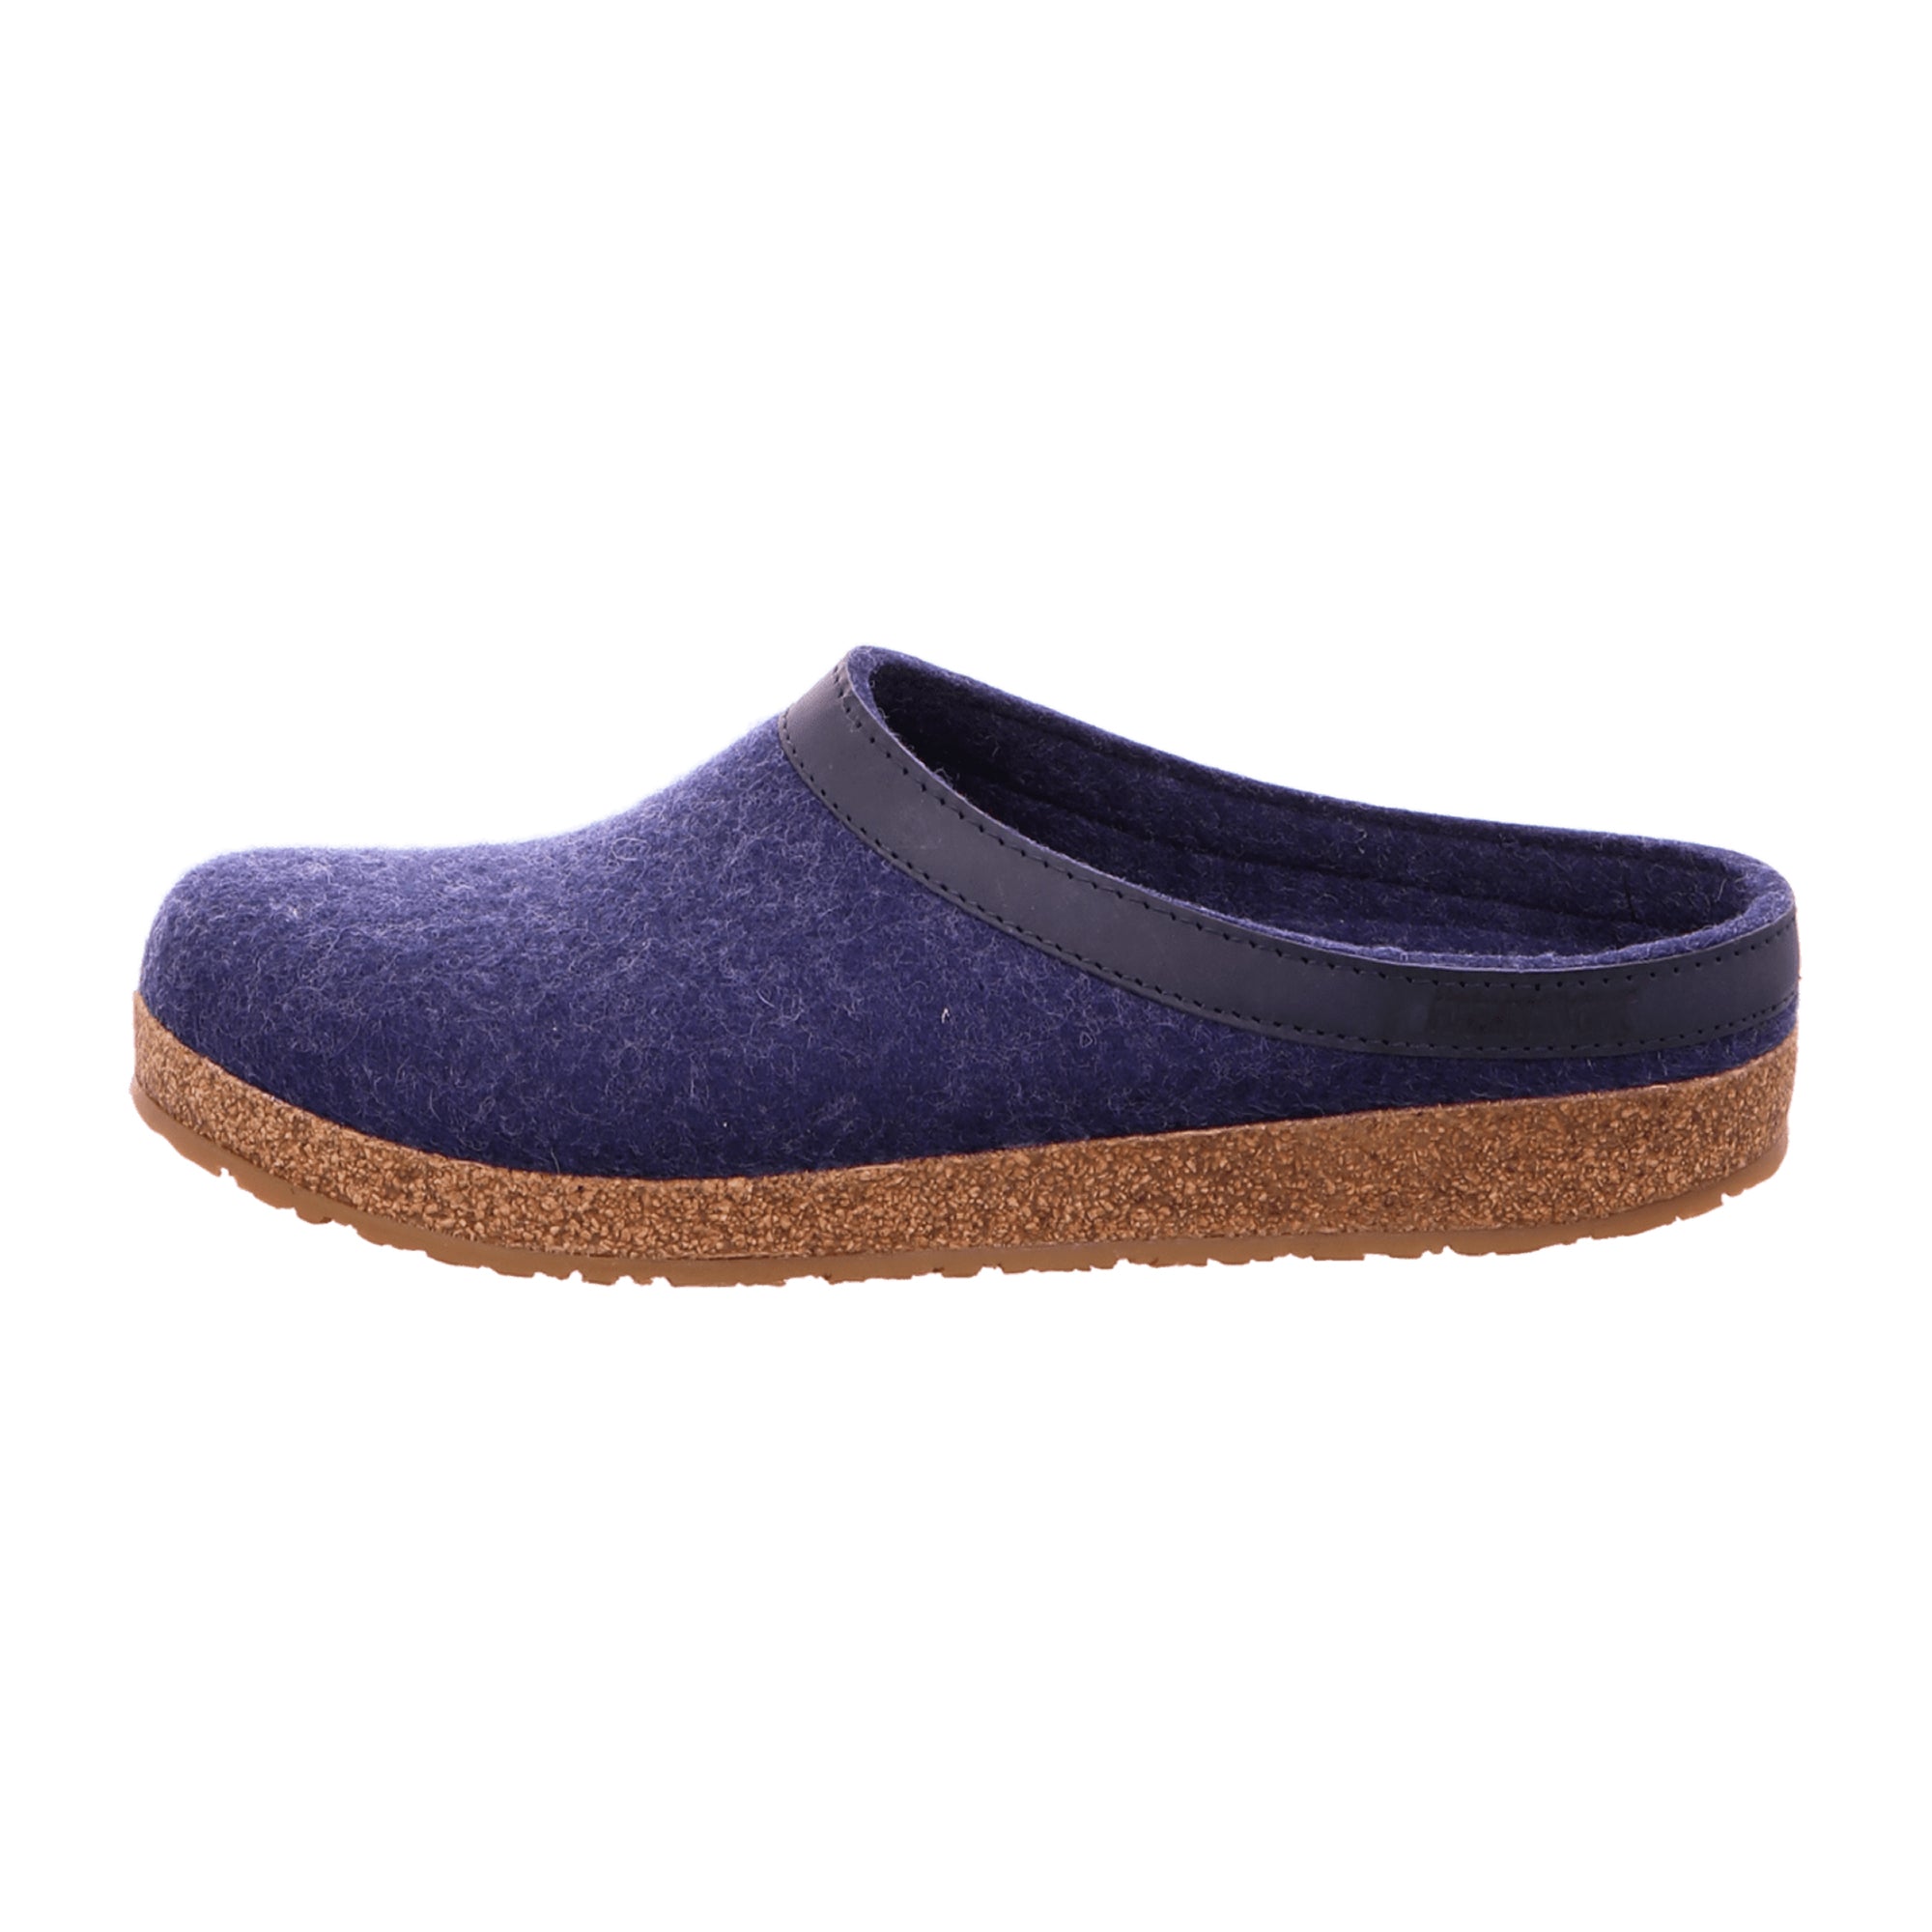 Haflinger Torben Men's Slippers, Stylish Blue Wool Comfort